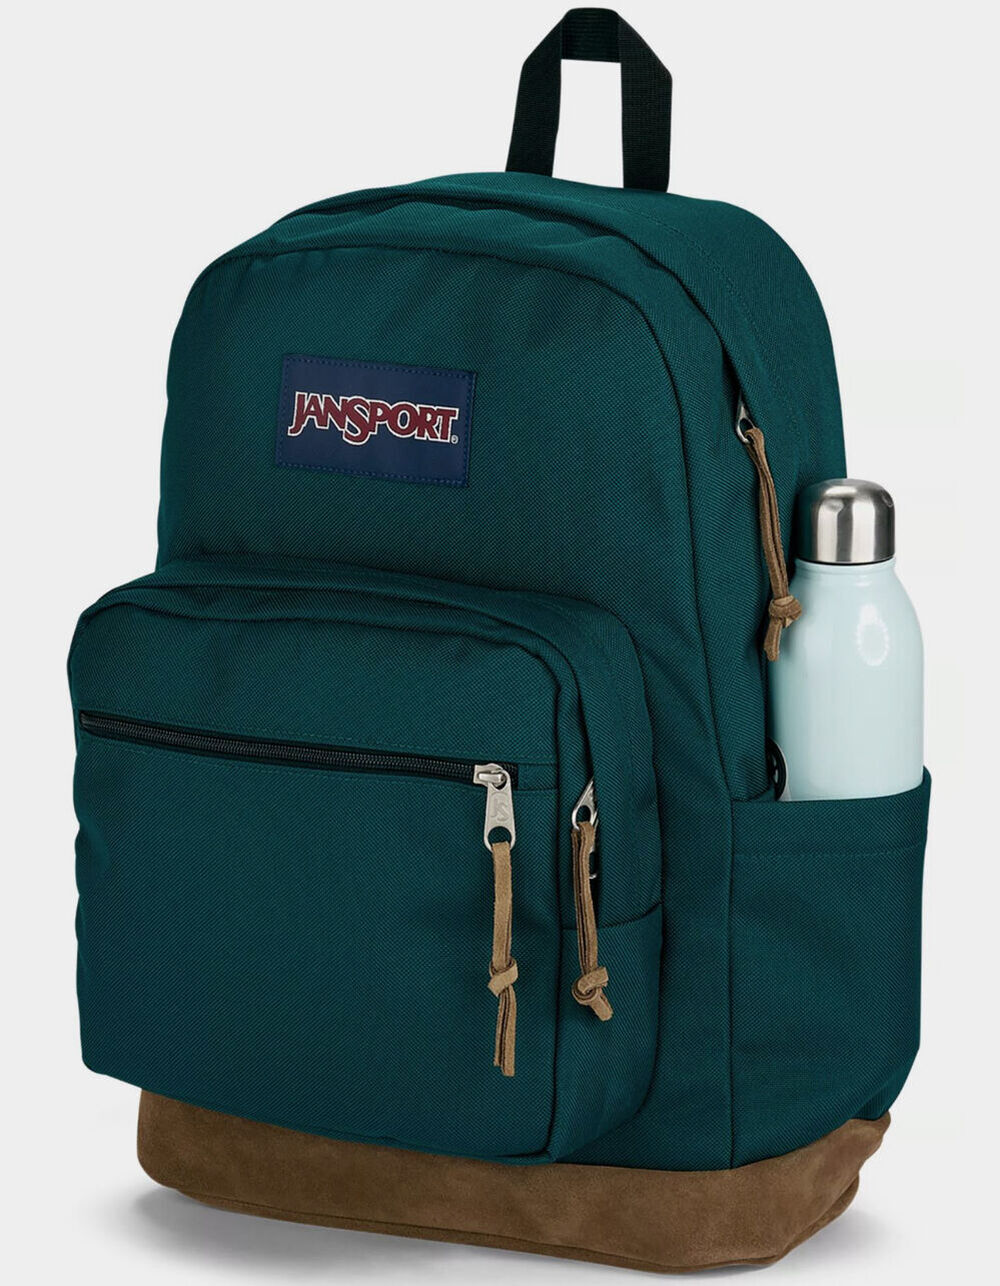 JANSPORT Right Pack Backpack LODEN FROST Tillys | lupon.gov.ph